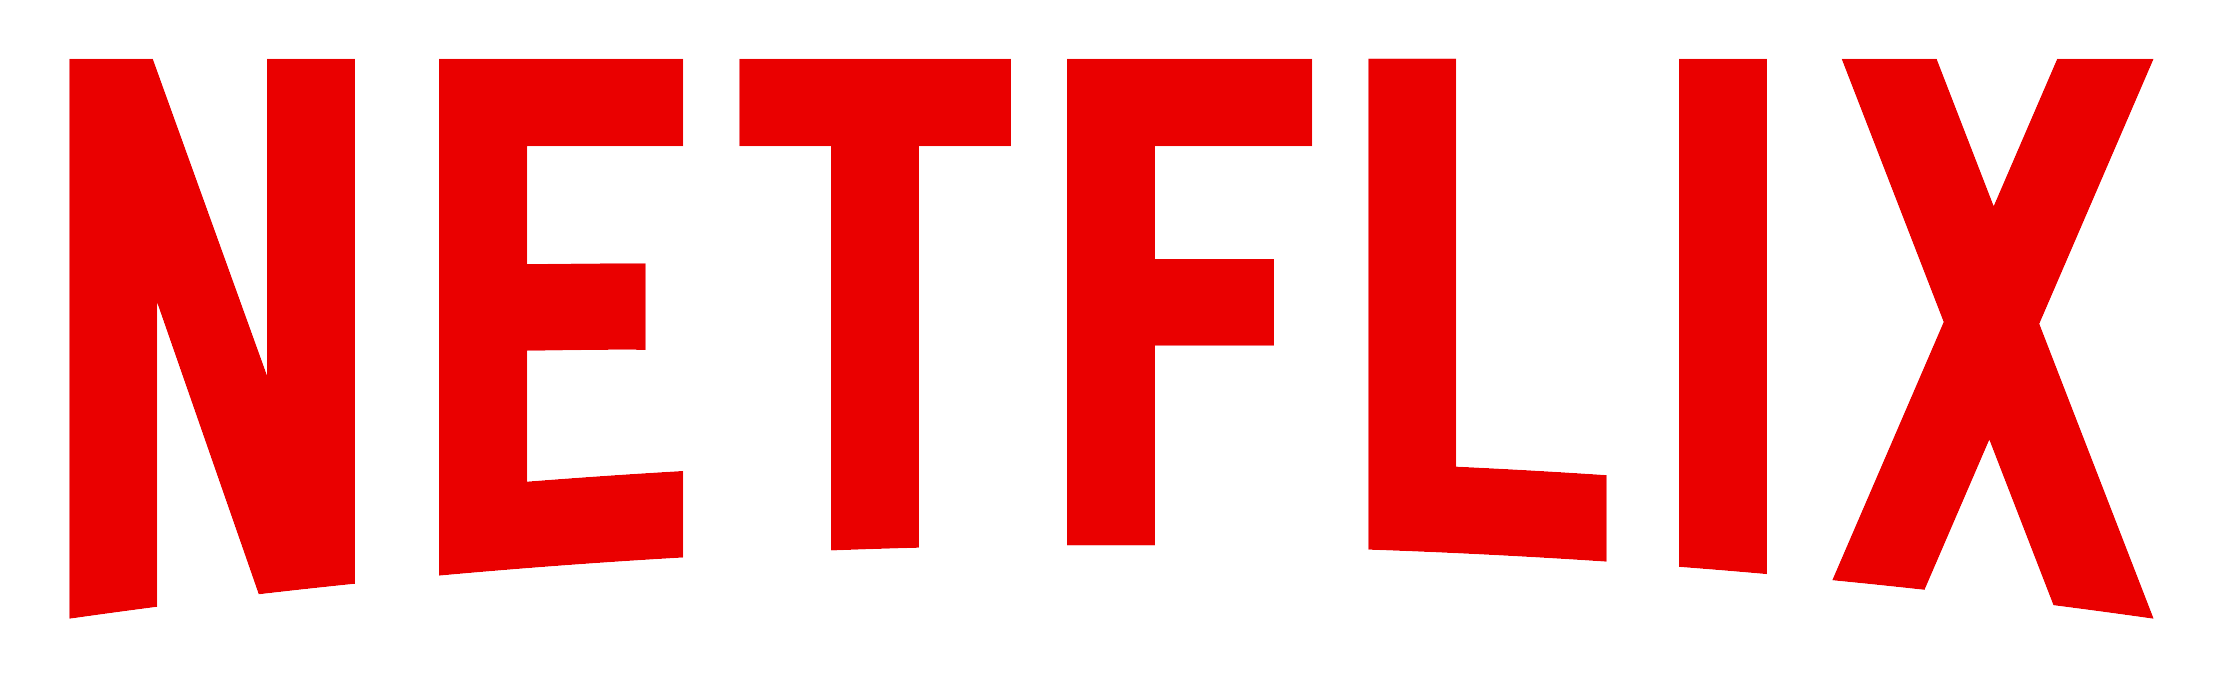 netflix logo history